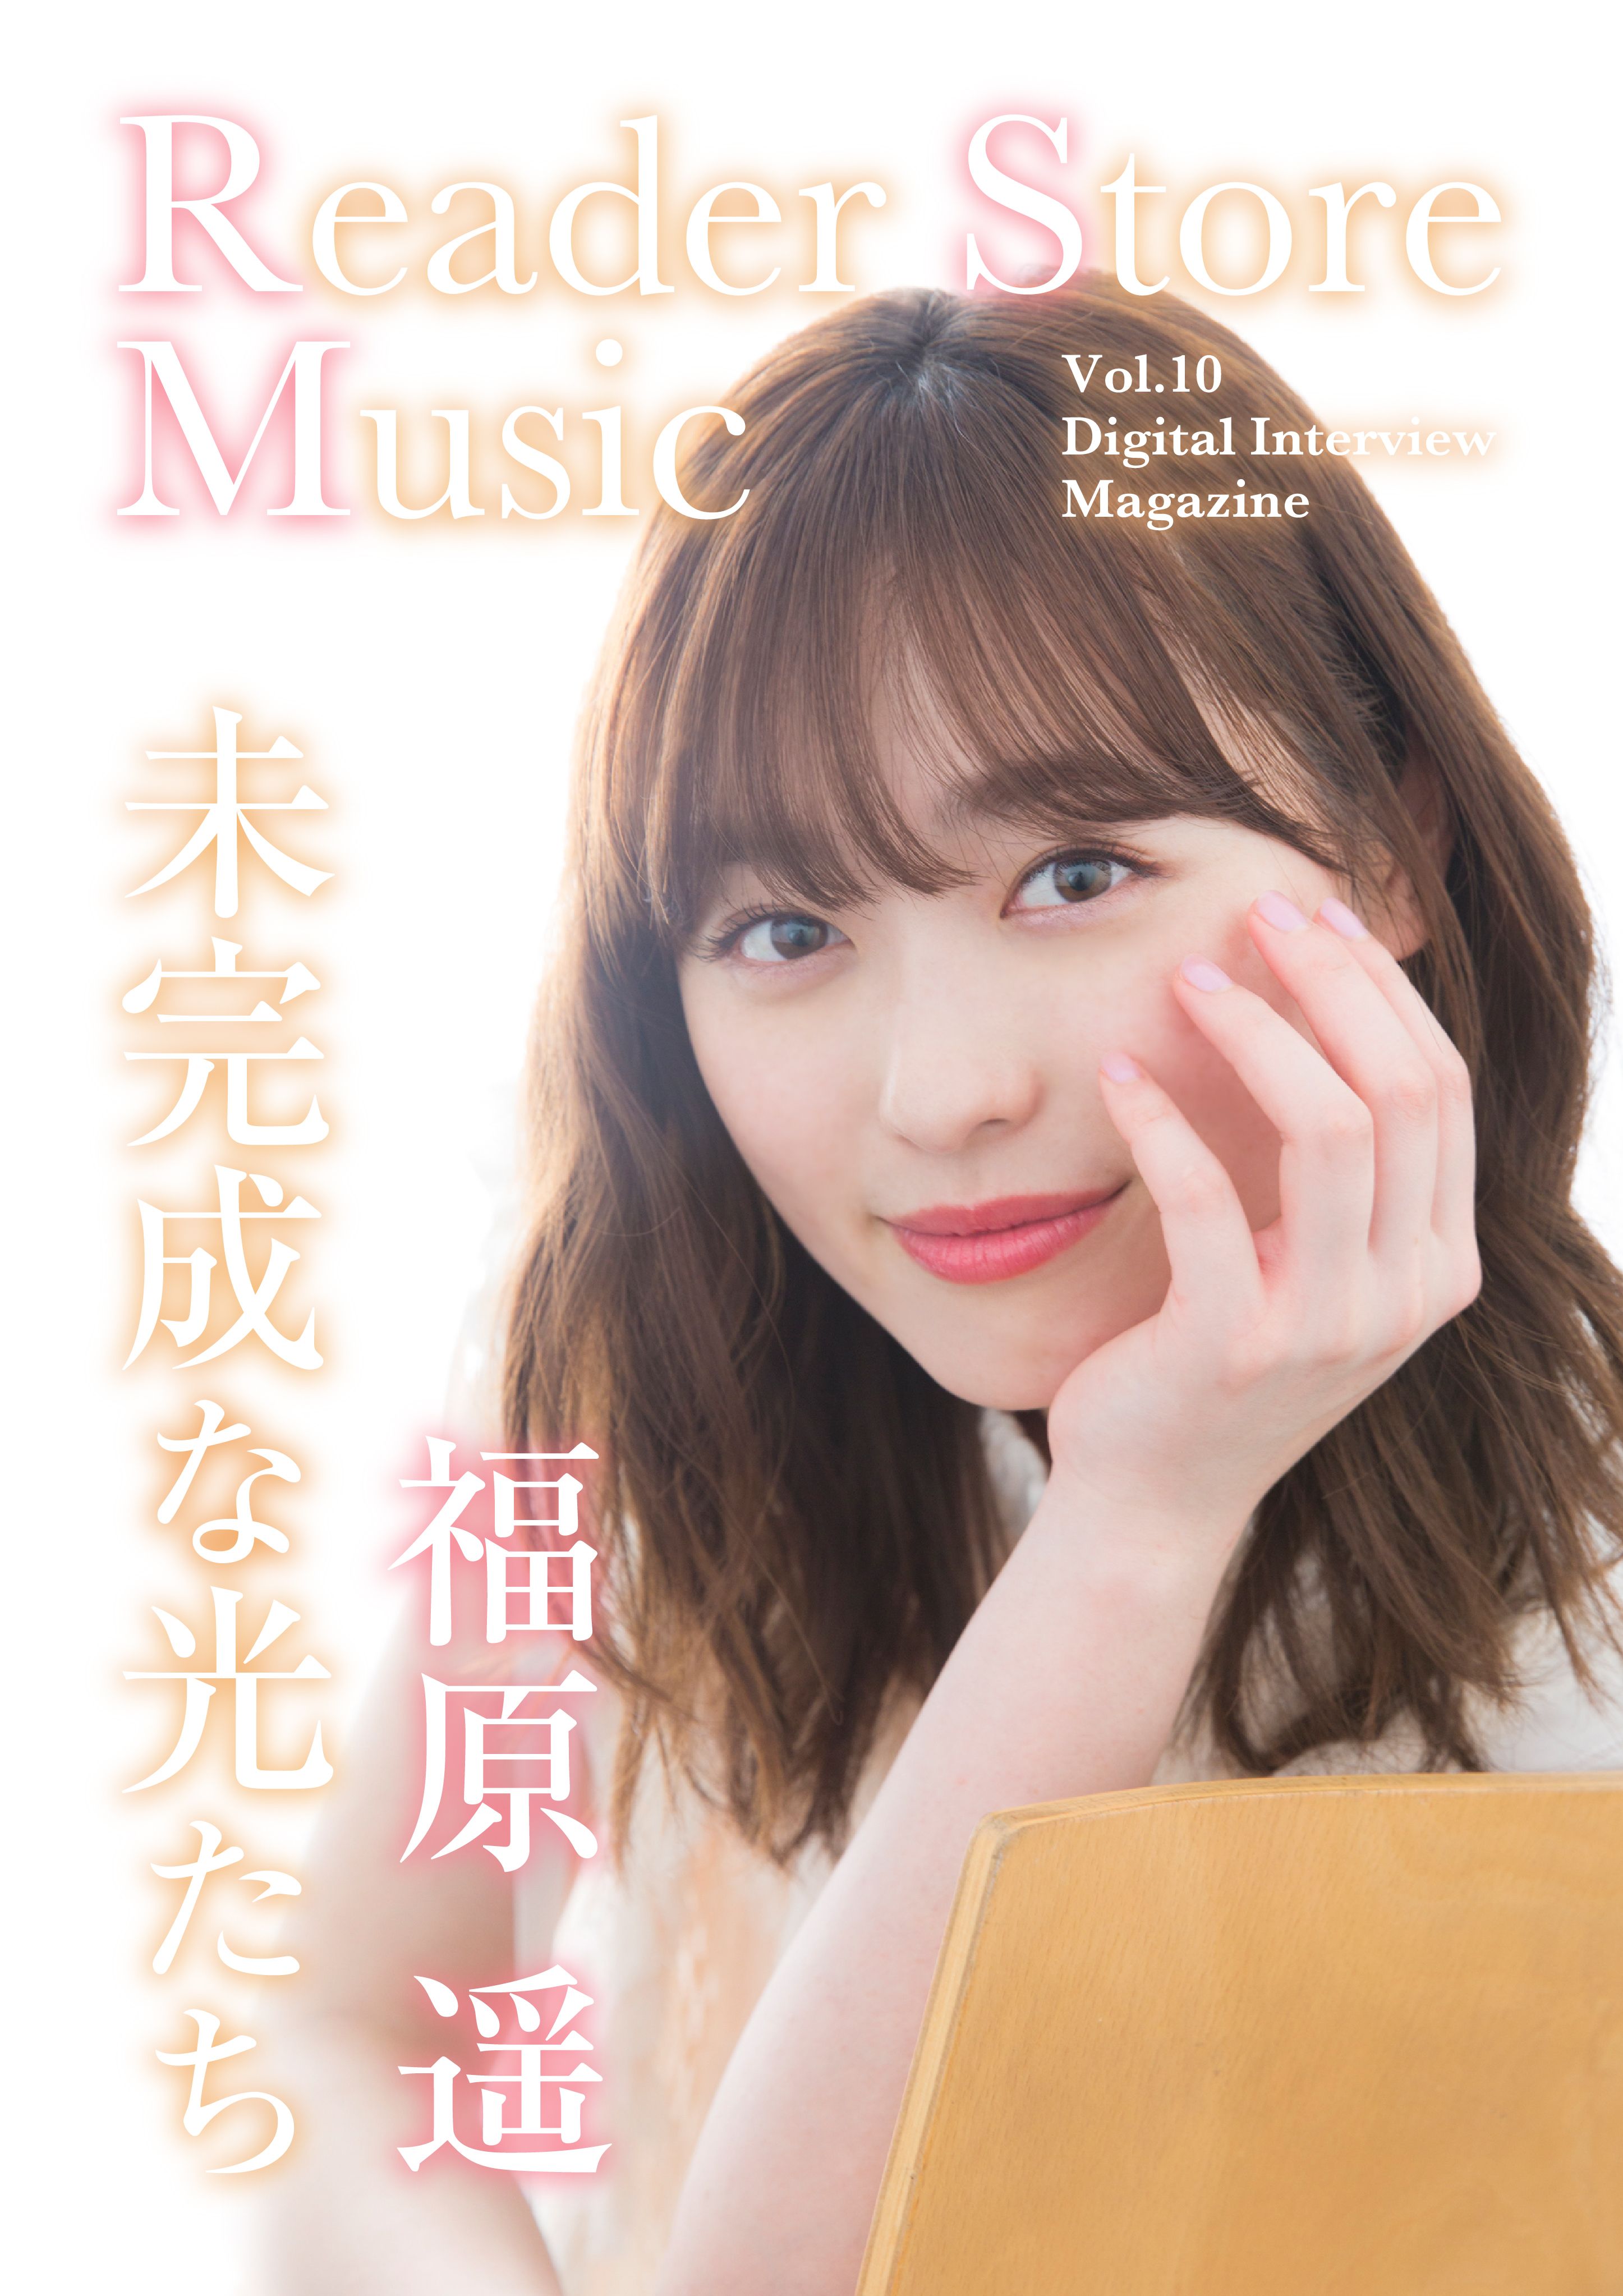 Reader Store限定無料配信 Reader Store Music Vol 10 福原遥 ソニーの電子書籍ストア Reader Store